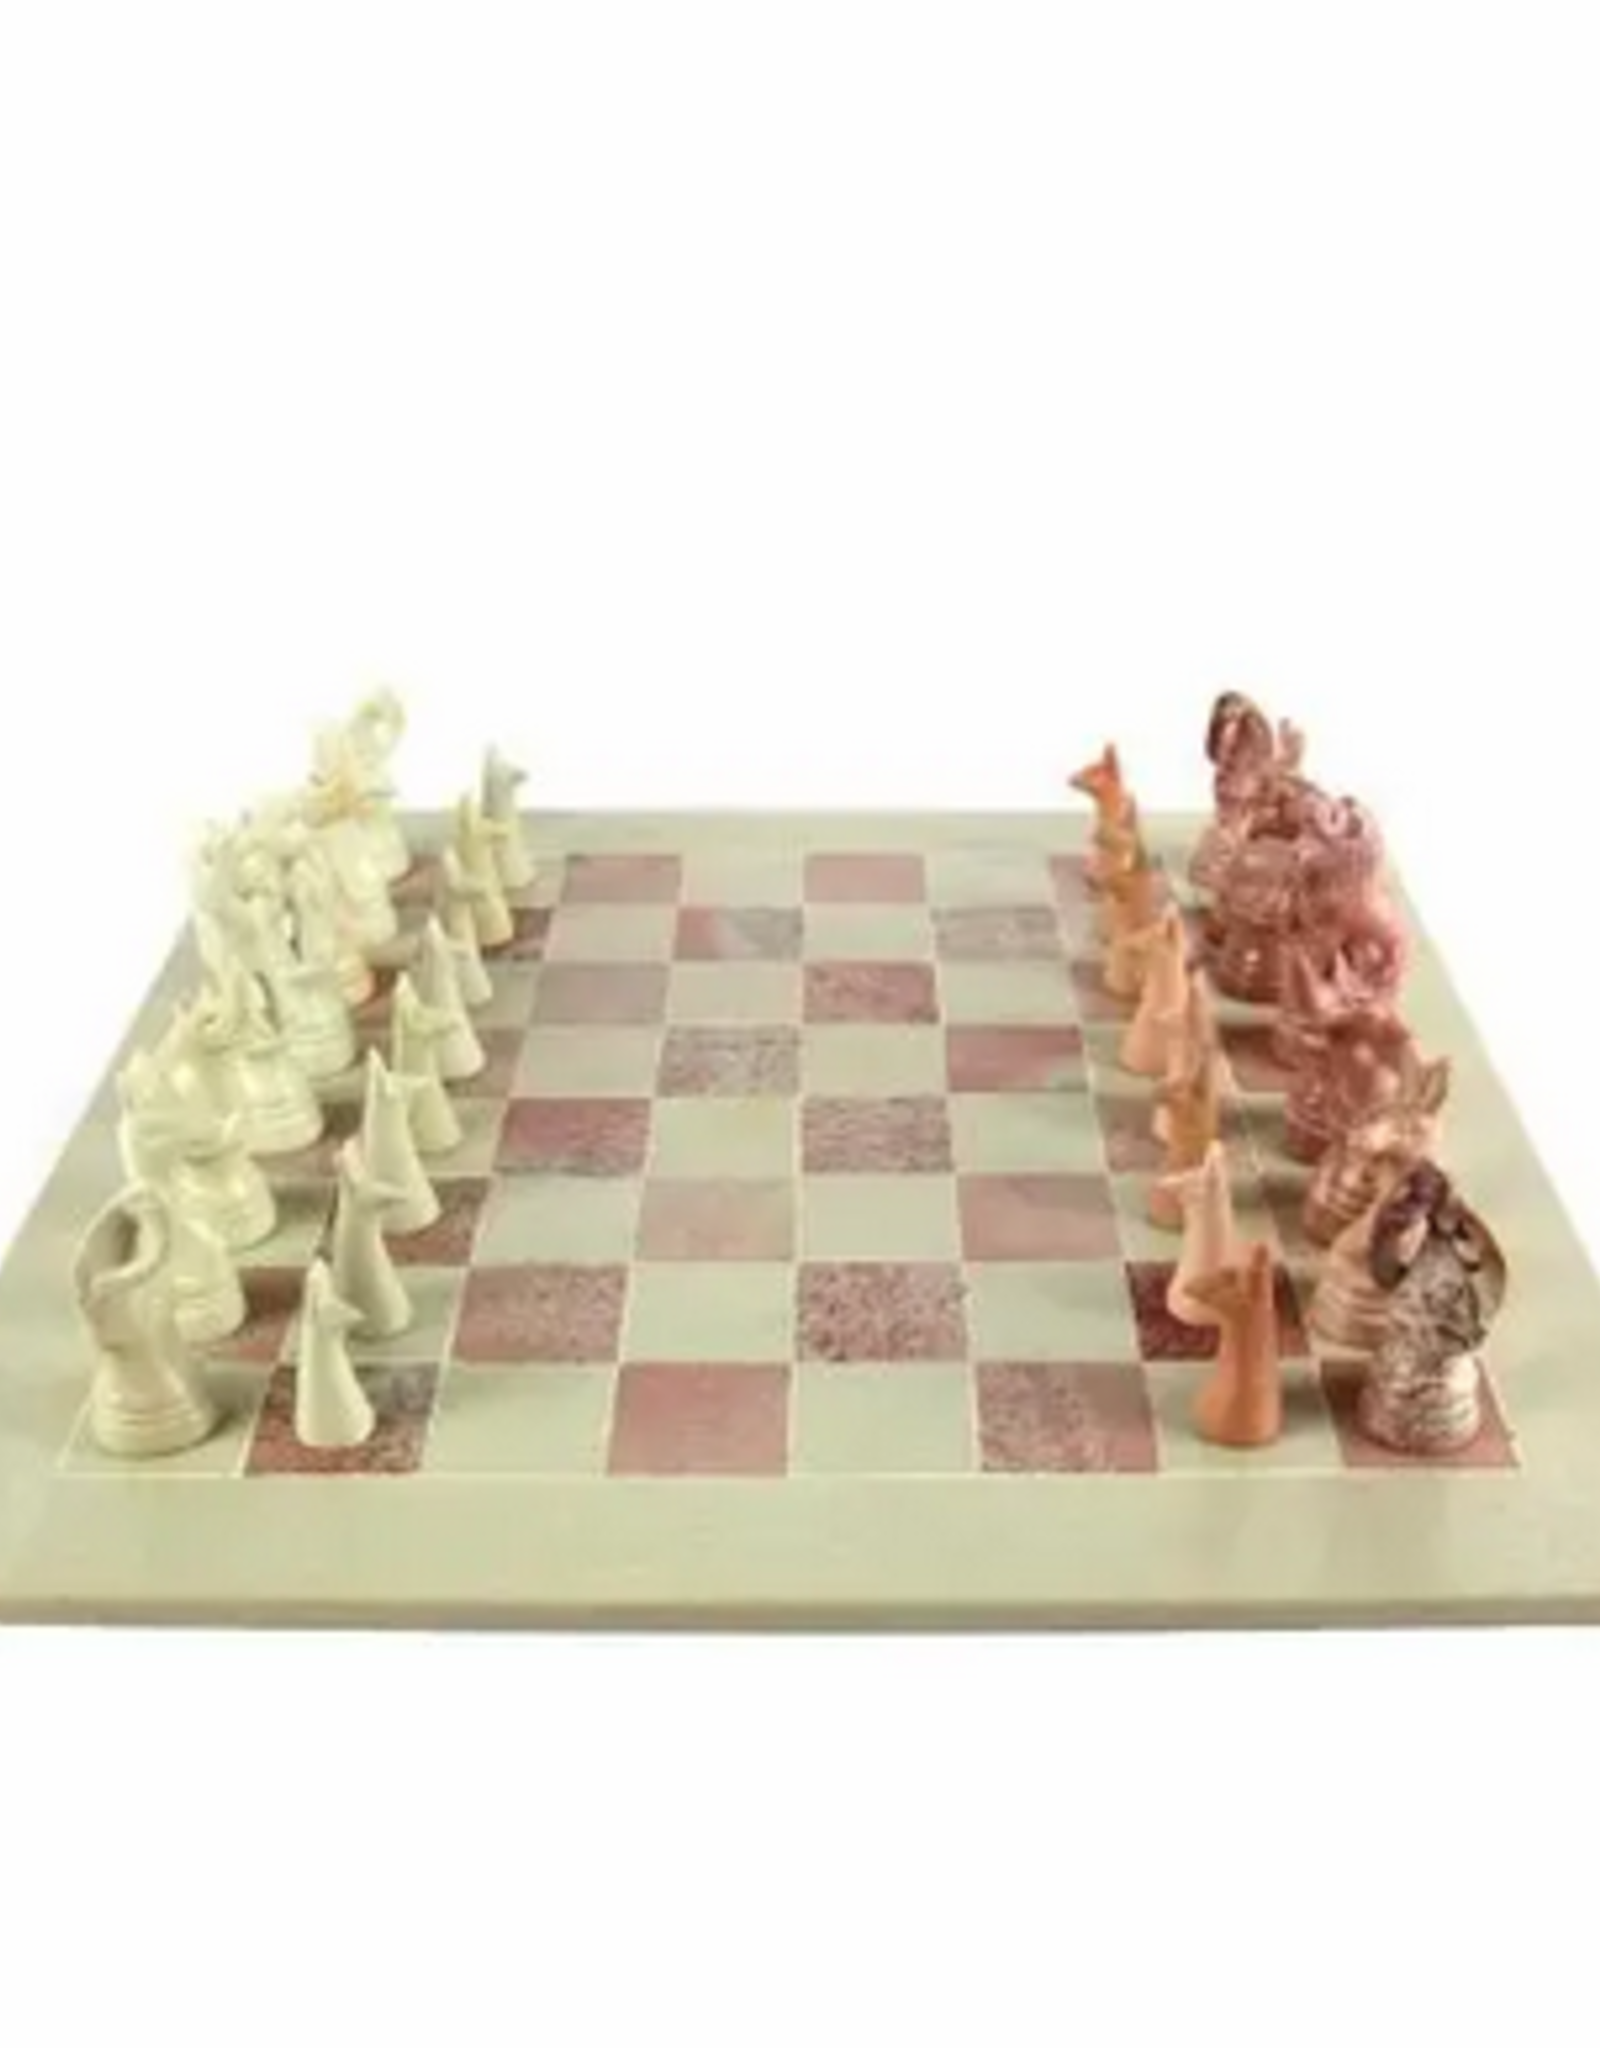 Global Crafts Animal Chess Set - Soapstone, 15" board